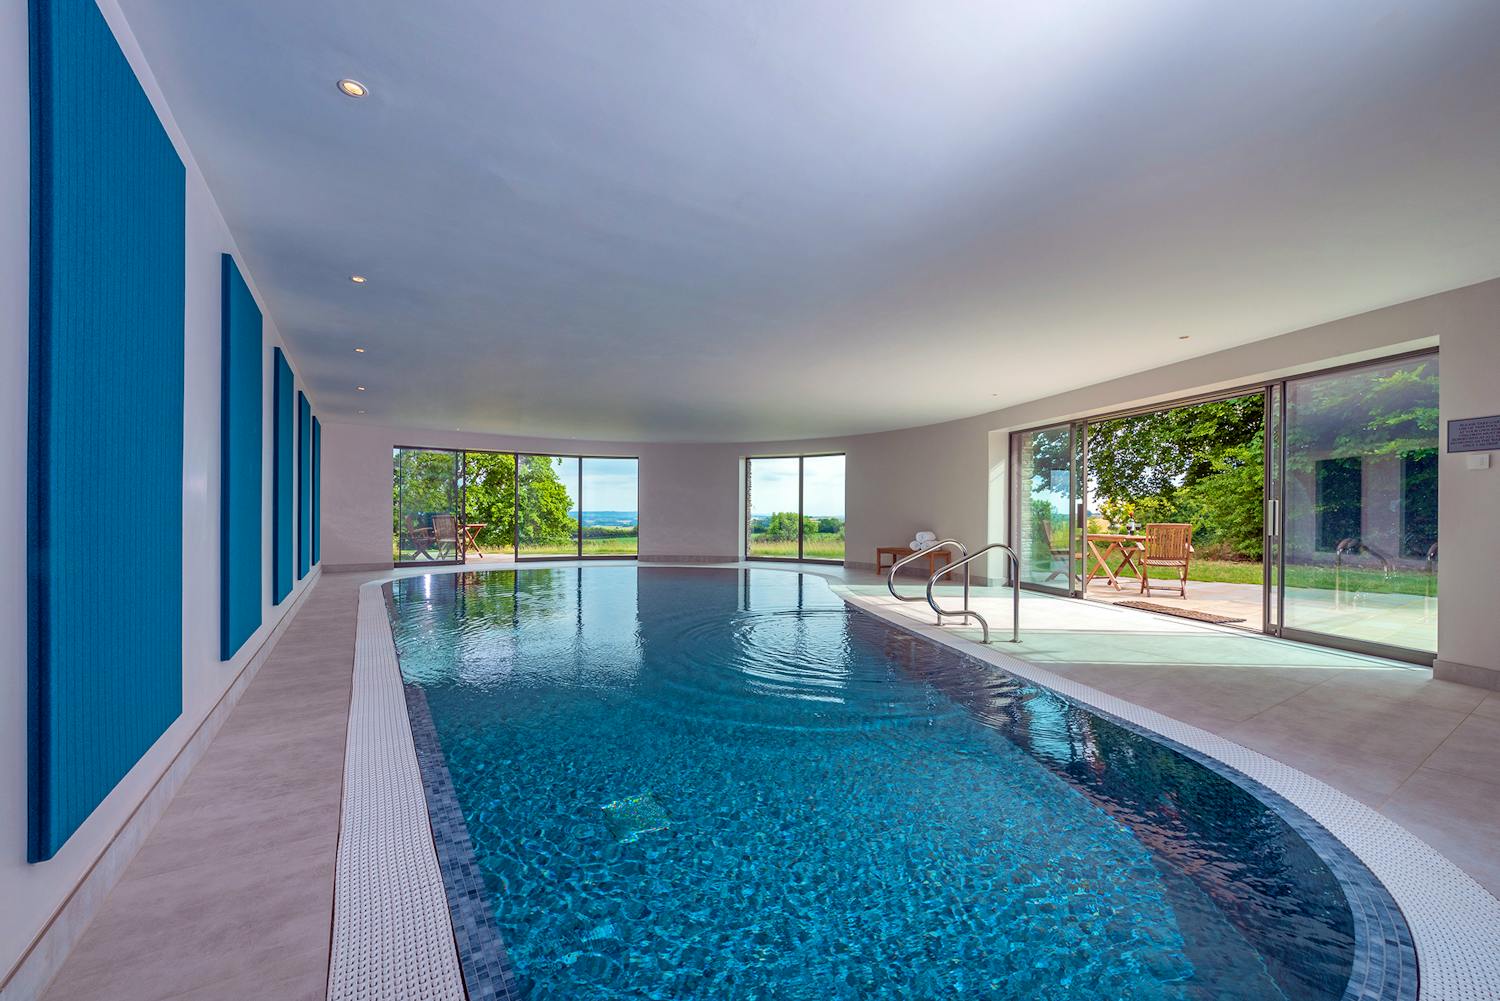 11 Stunning Spa Pools  Spa interior design, Indoor swimming pool design,  Indoor pool design